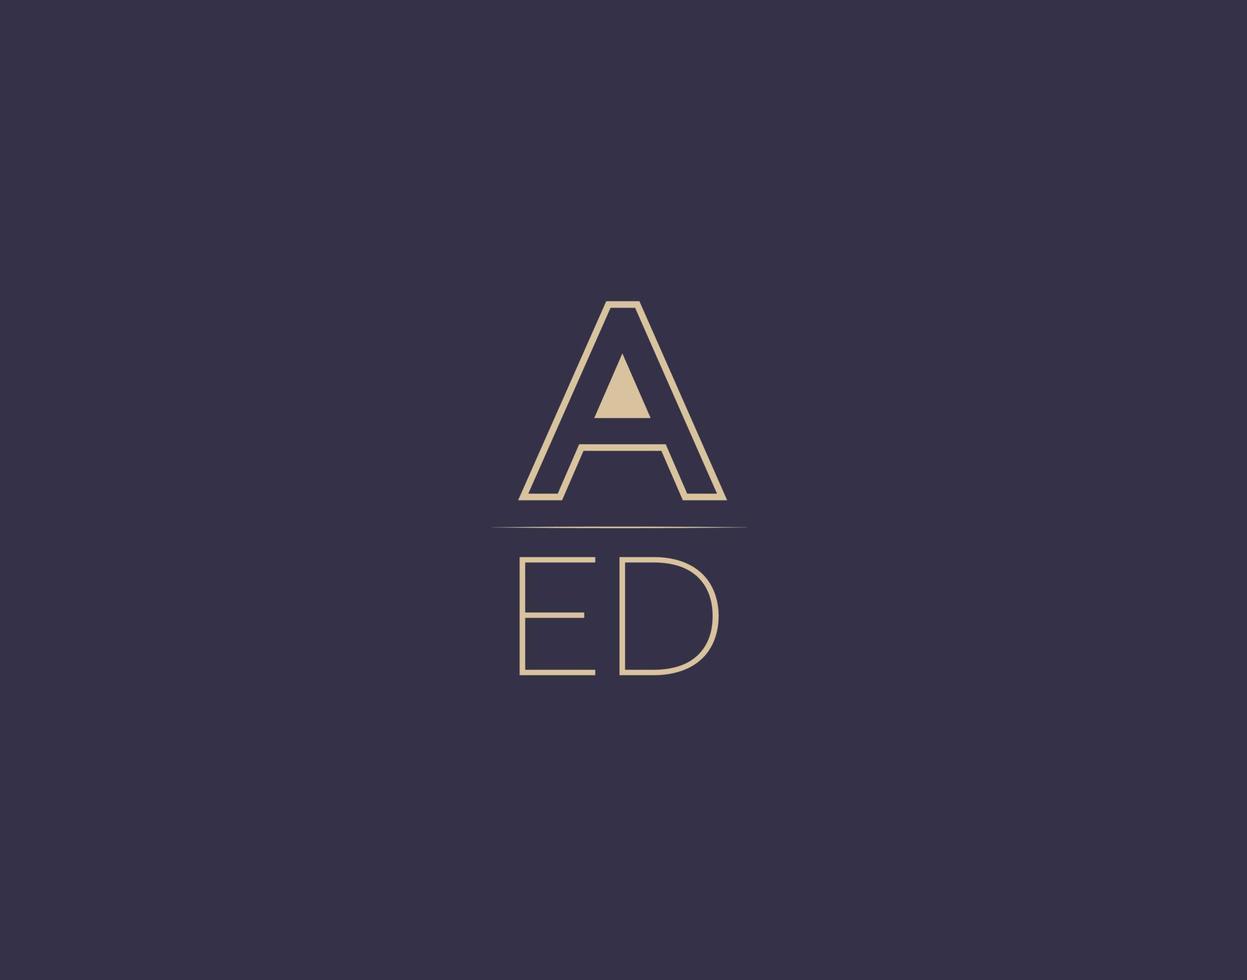 aed brief logo ontwerp modern minimalistische vector afbeeldingen